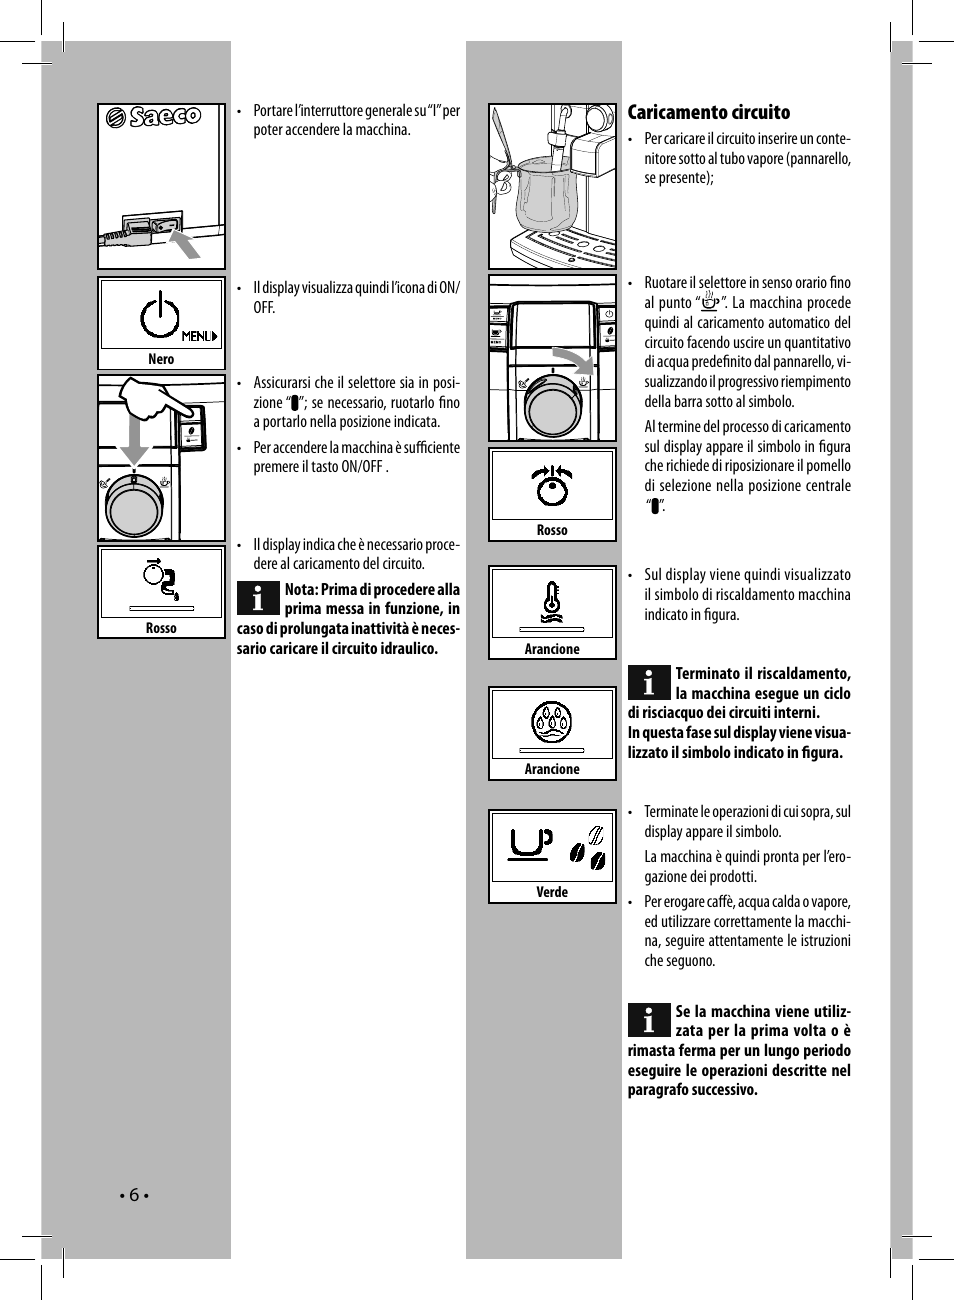 Caricamento circuito | Philips Saeco Syntia Kaffeevollautomat User Manual |  Page 6 / 96 | Original mode